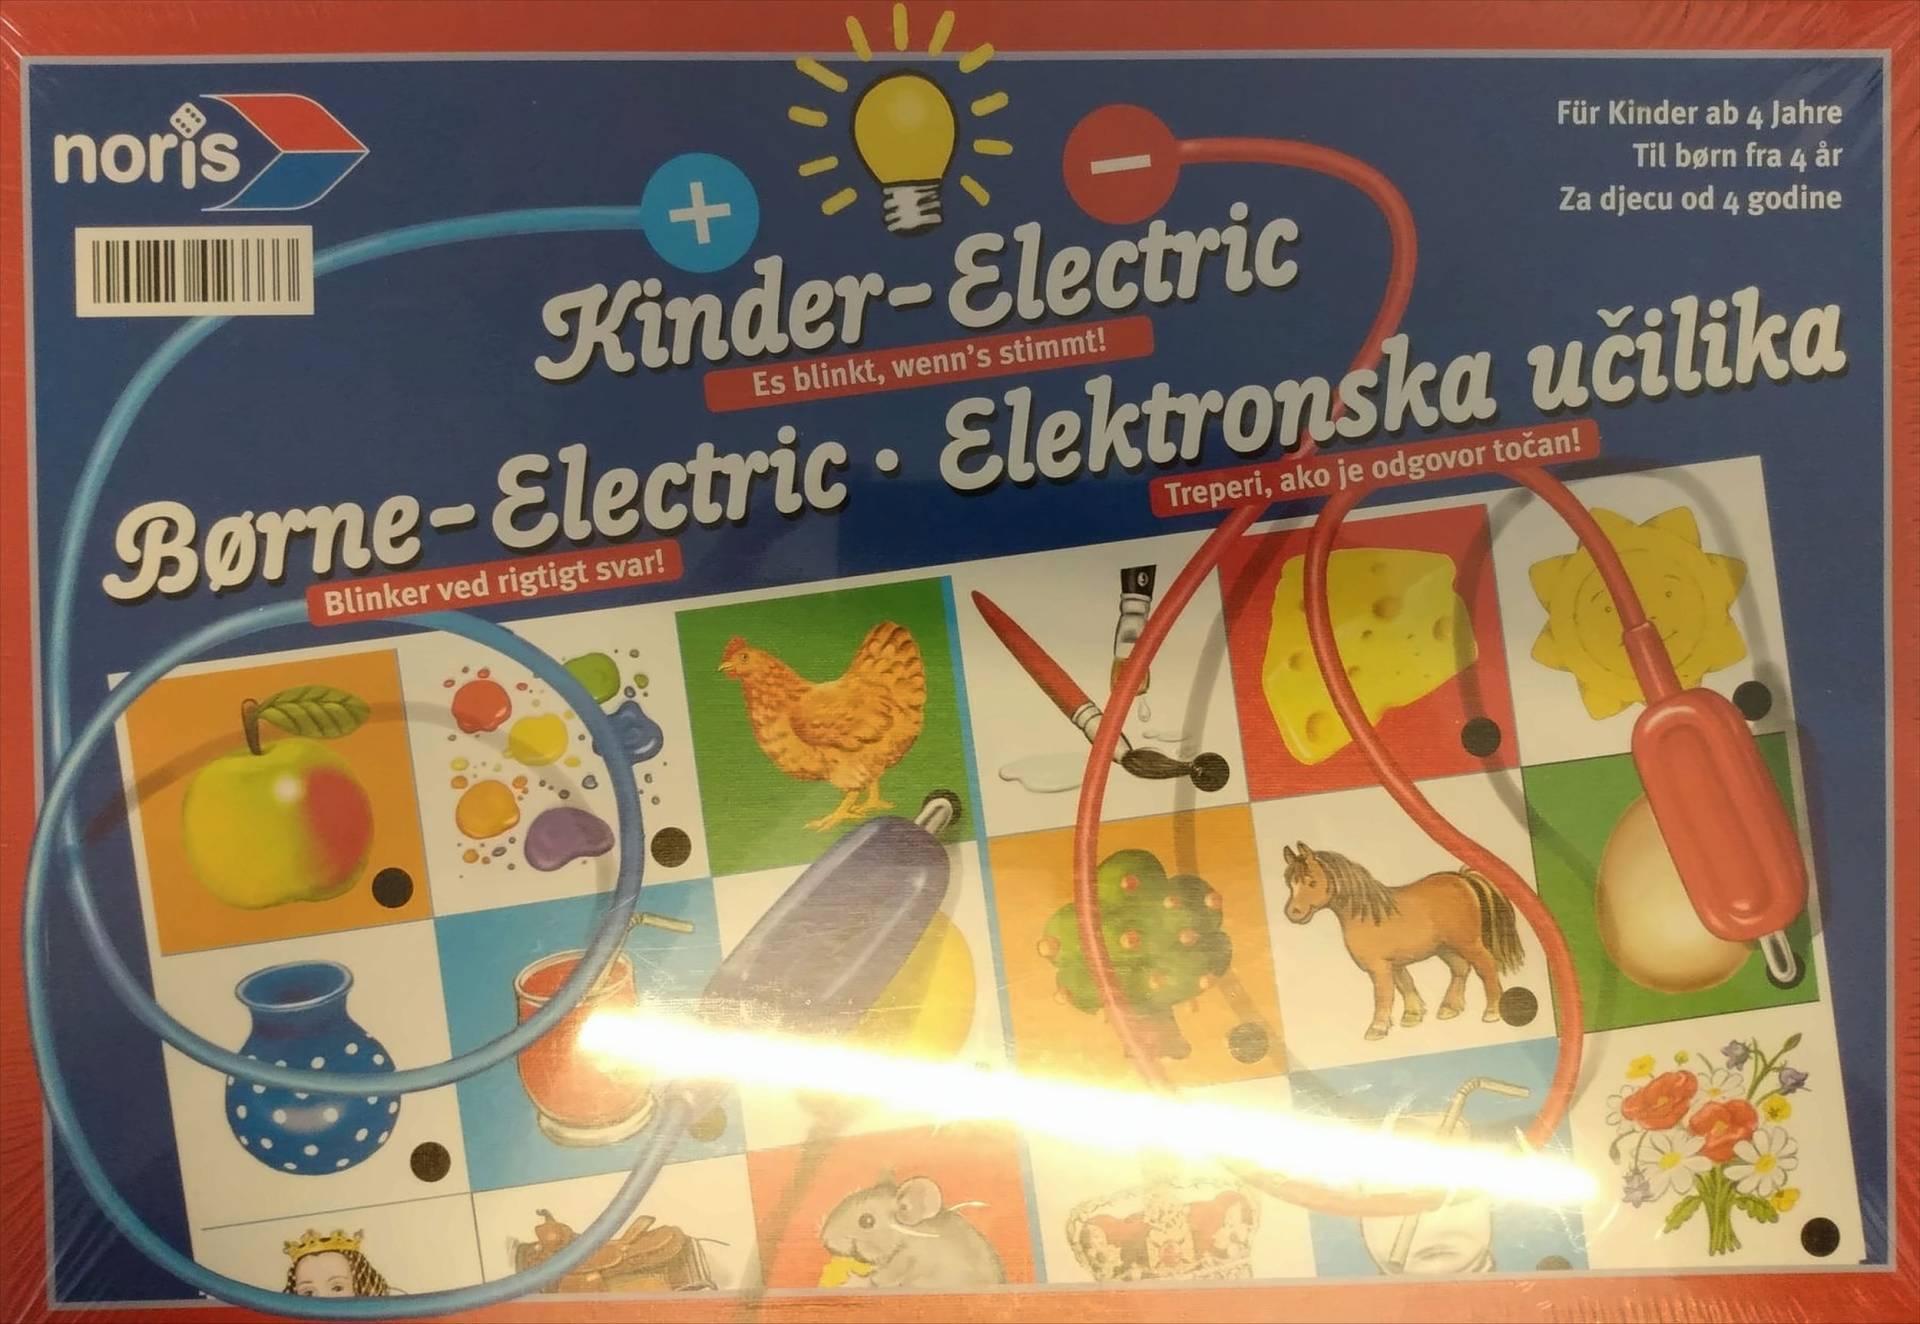 Kinder Electric, Kinderspiel von Noris